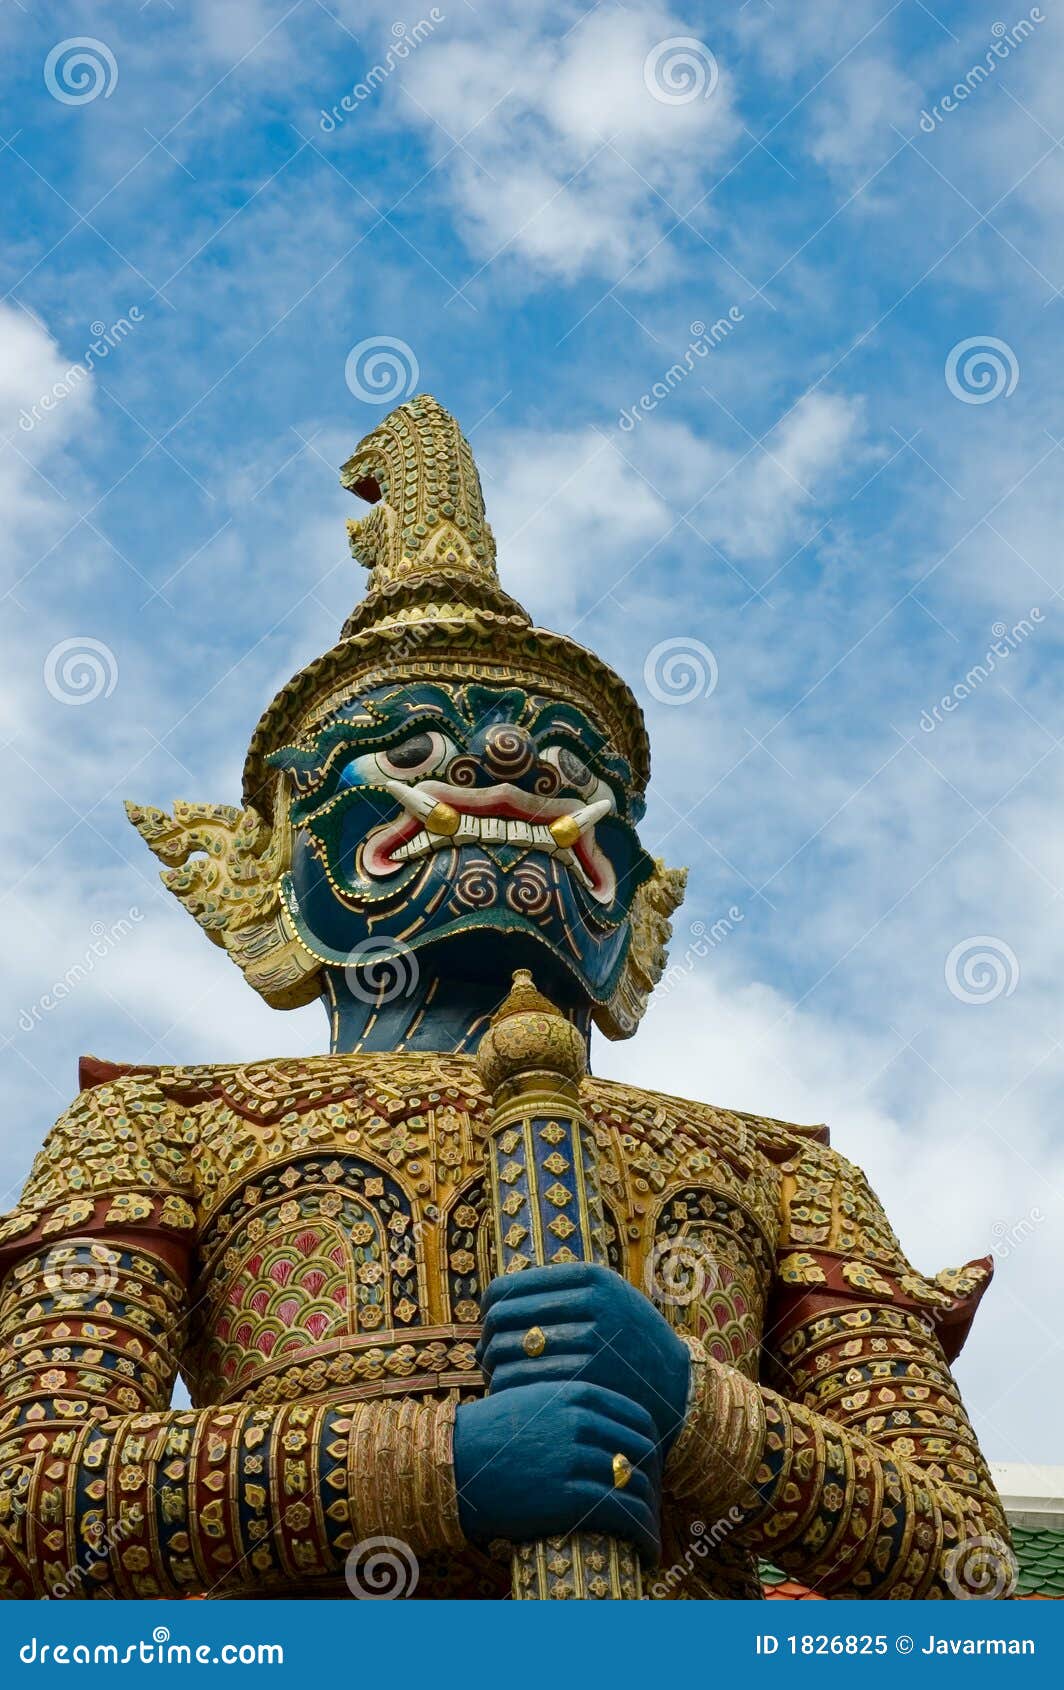 mythical giant guardian at wat phra kaew, bangkok